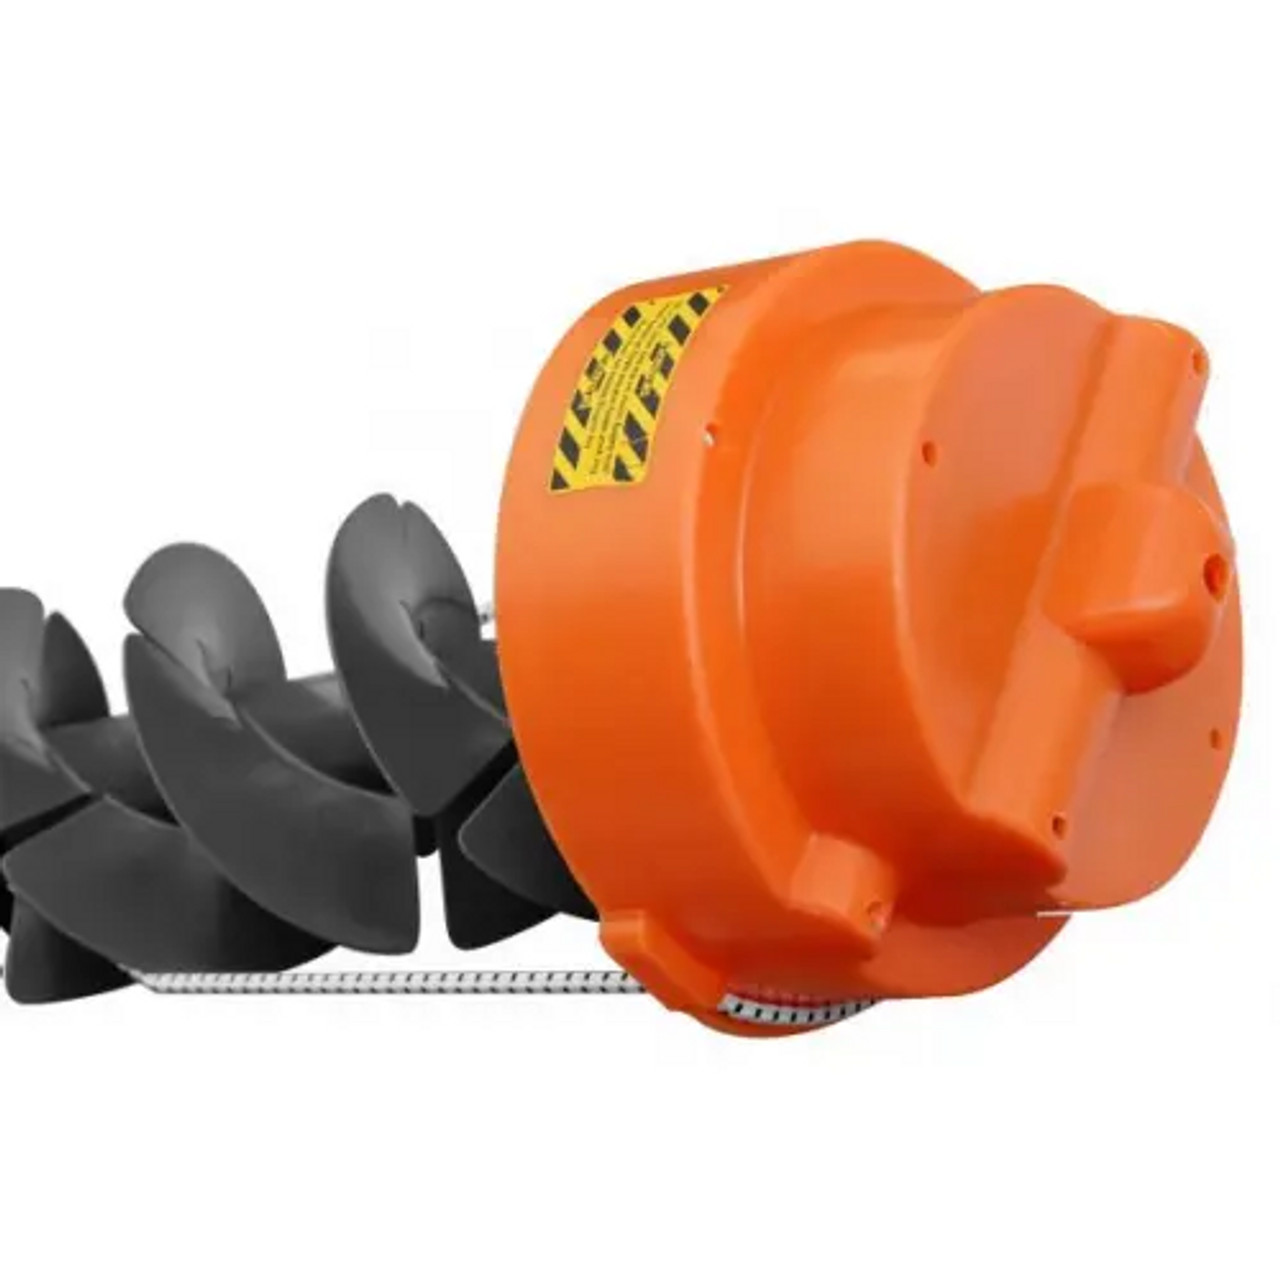 K-Drill Orange Safety Cap (Blade Cover)